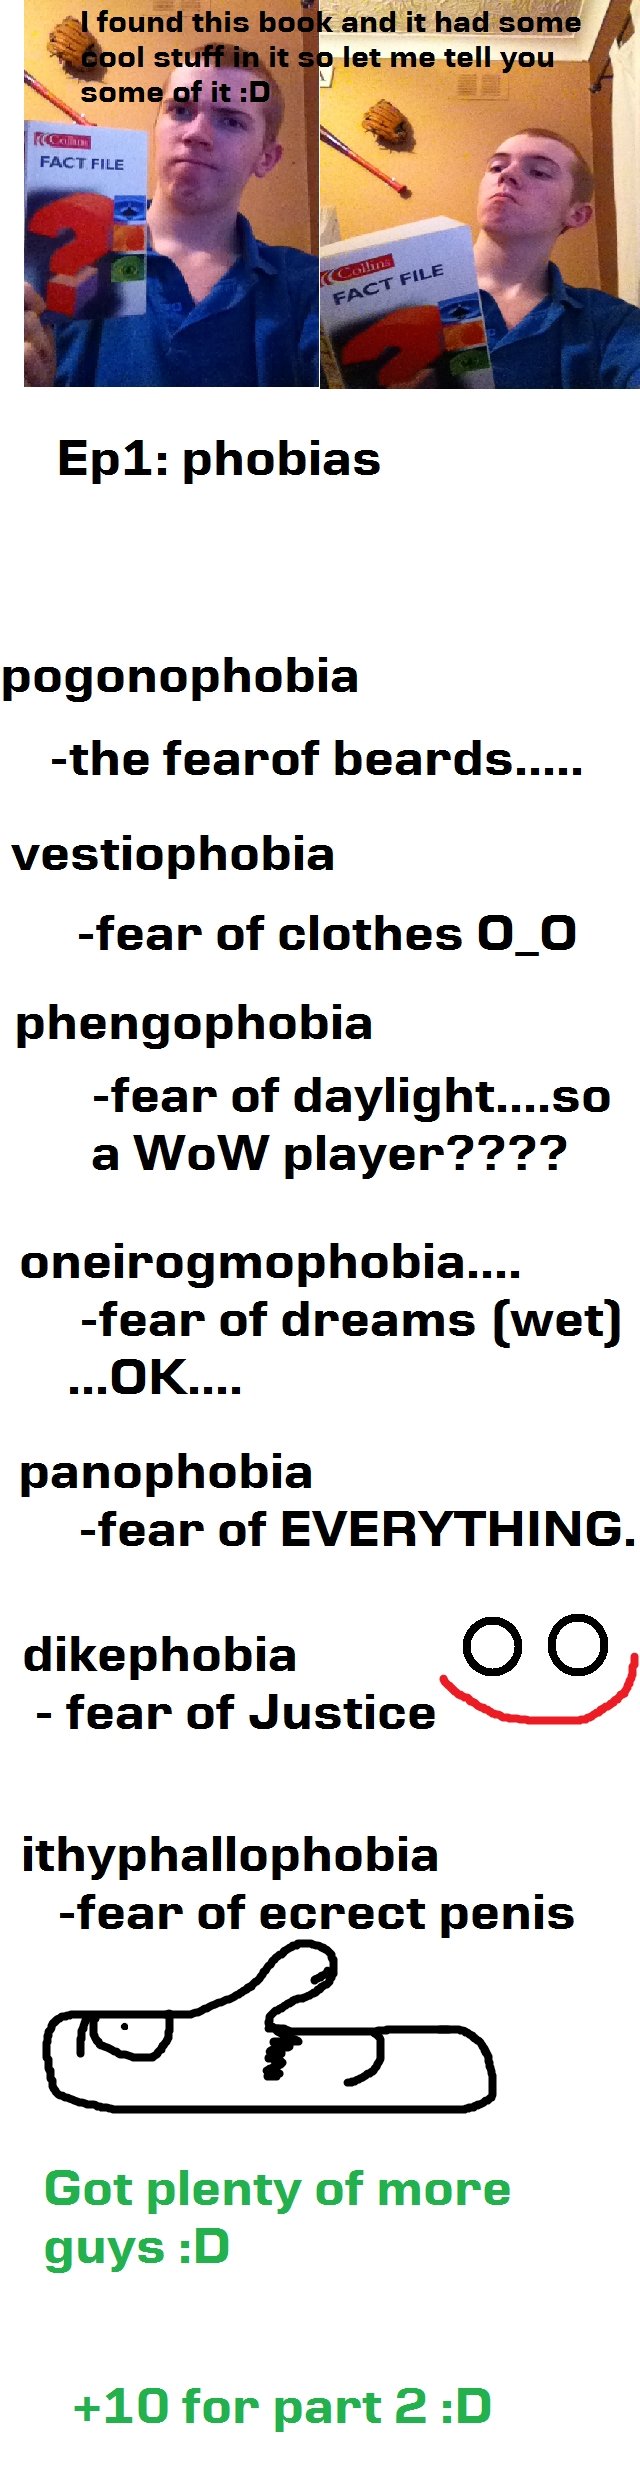 Weird Phobias 1. More? &lt;a href=&quot; target=_blank&gt;www.facebook.com/gingercom&lt;/a&gt;. Epa: phobias demonophobia the fearow beards"... fear of clothes 